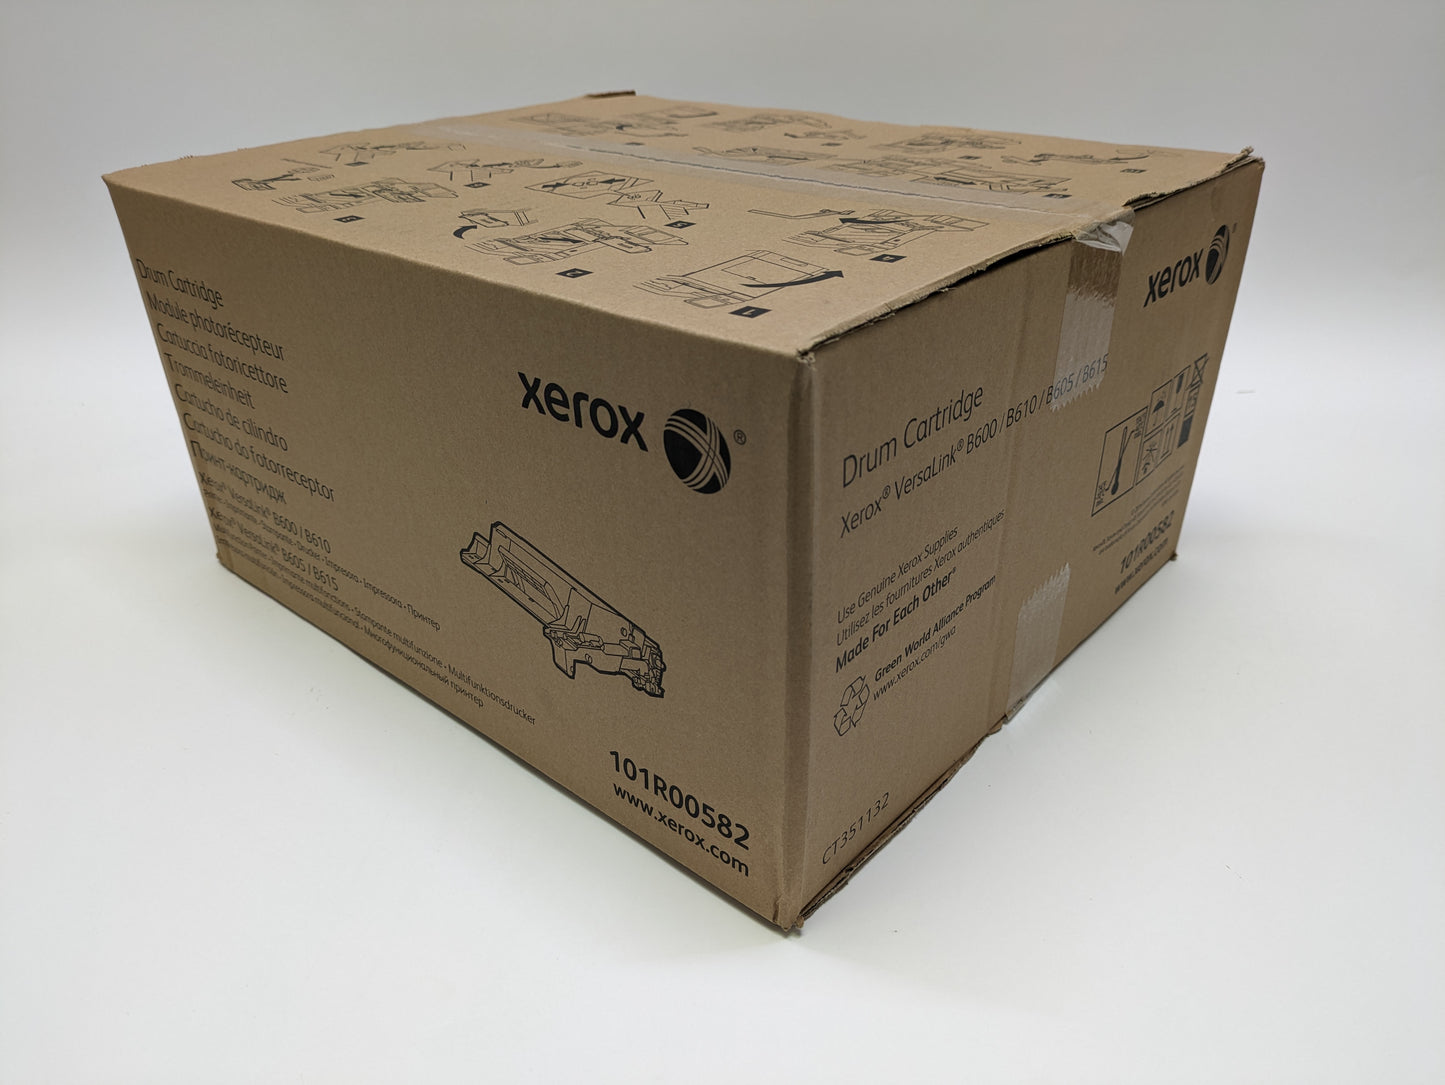 Xerox VersaLink Drum Cartridge 101R00582 New